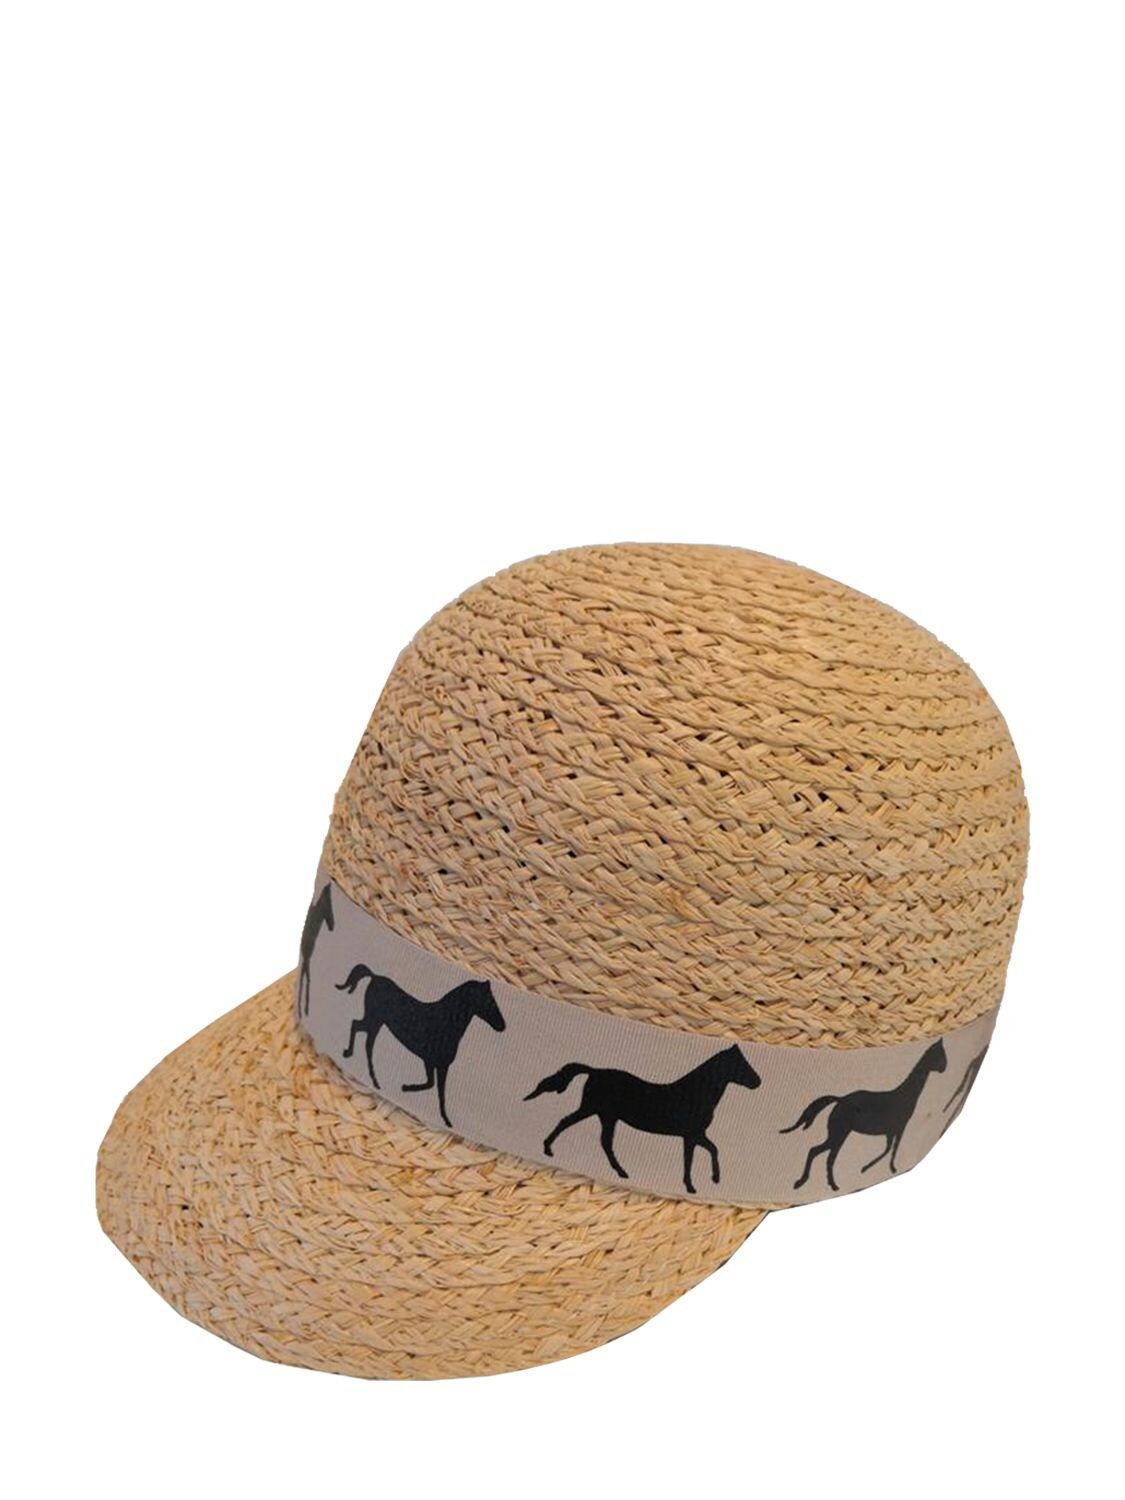 Acheval Pampa Borsalino X Àcheval Polo Straw Hat In Beige